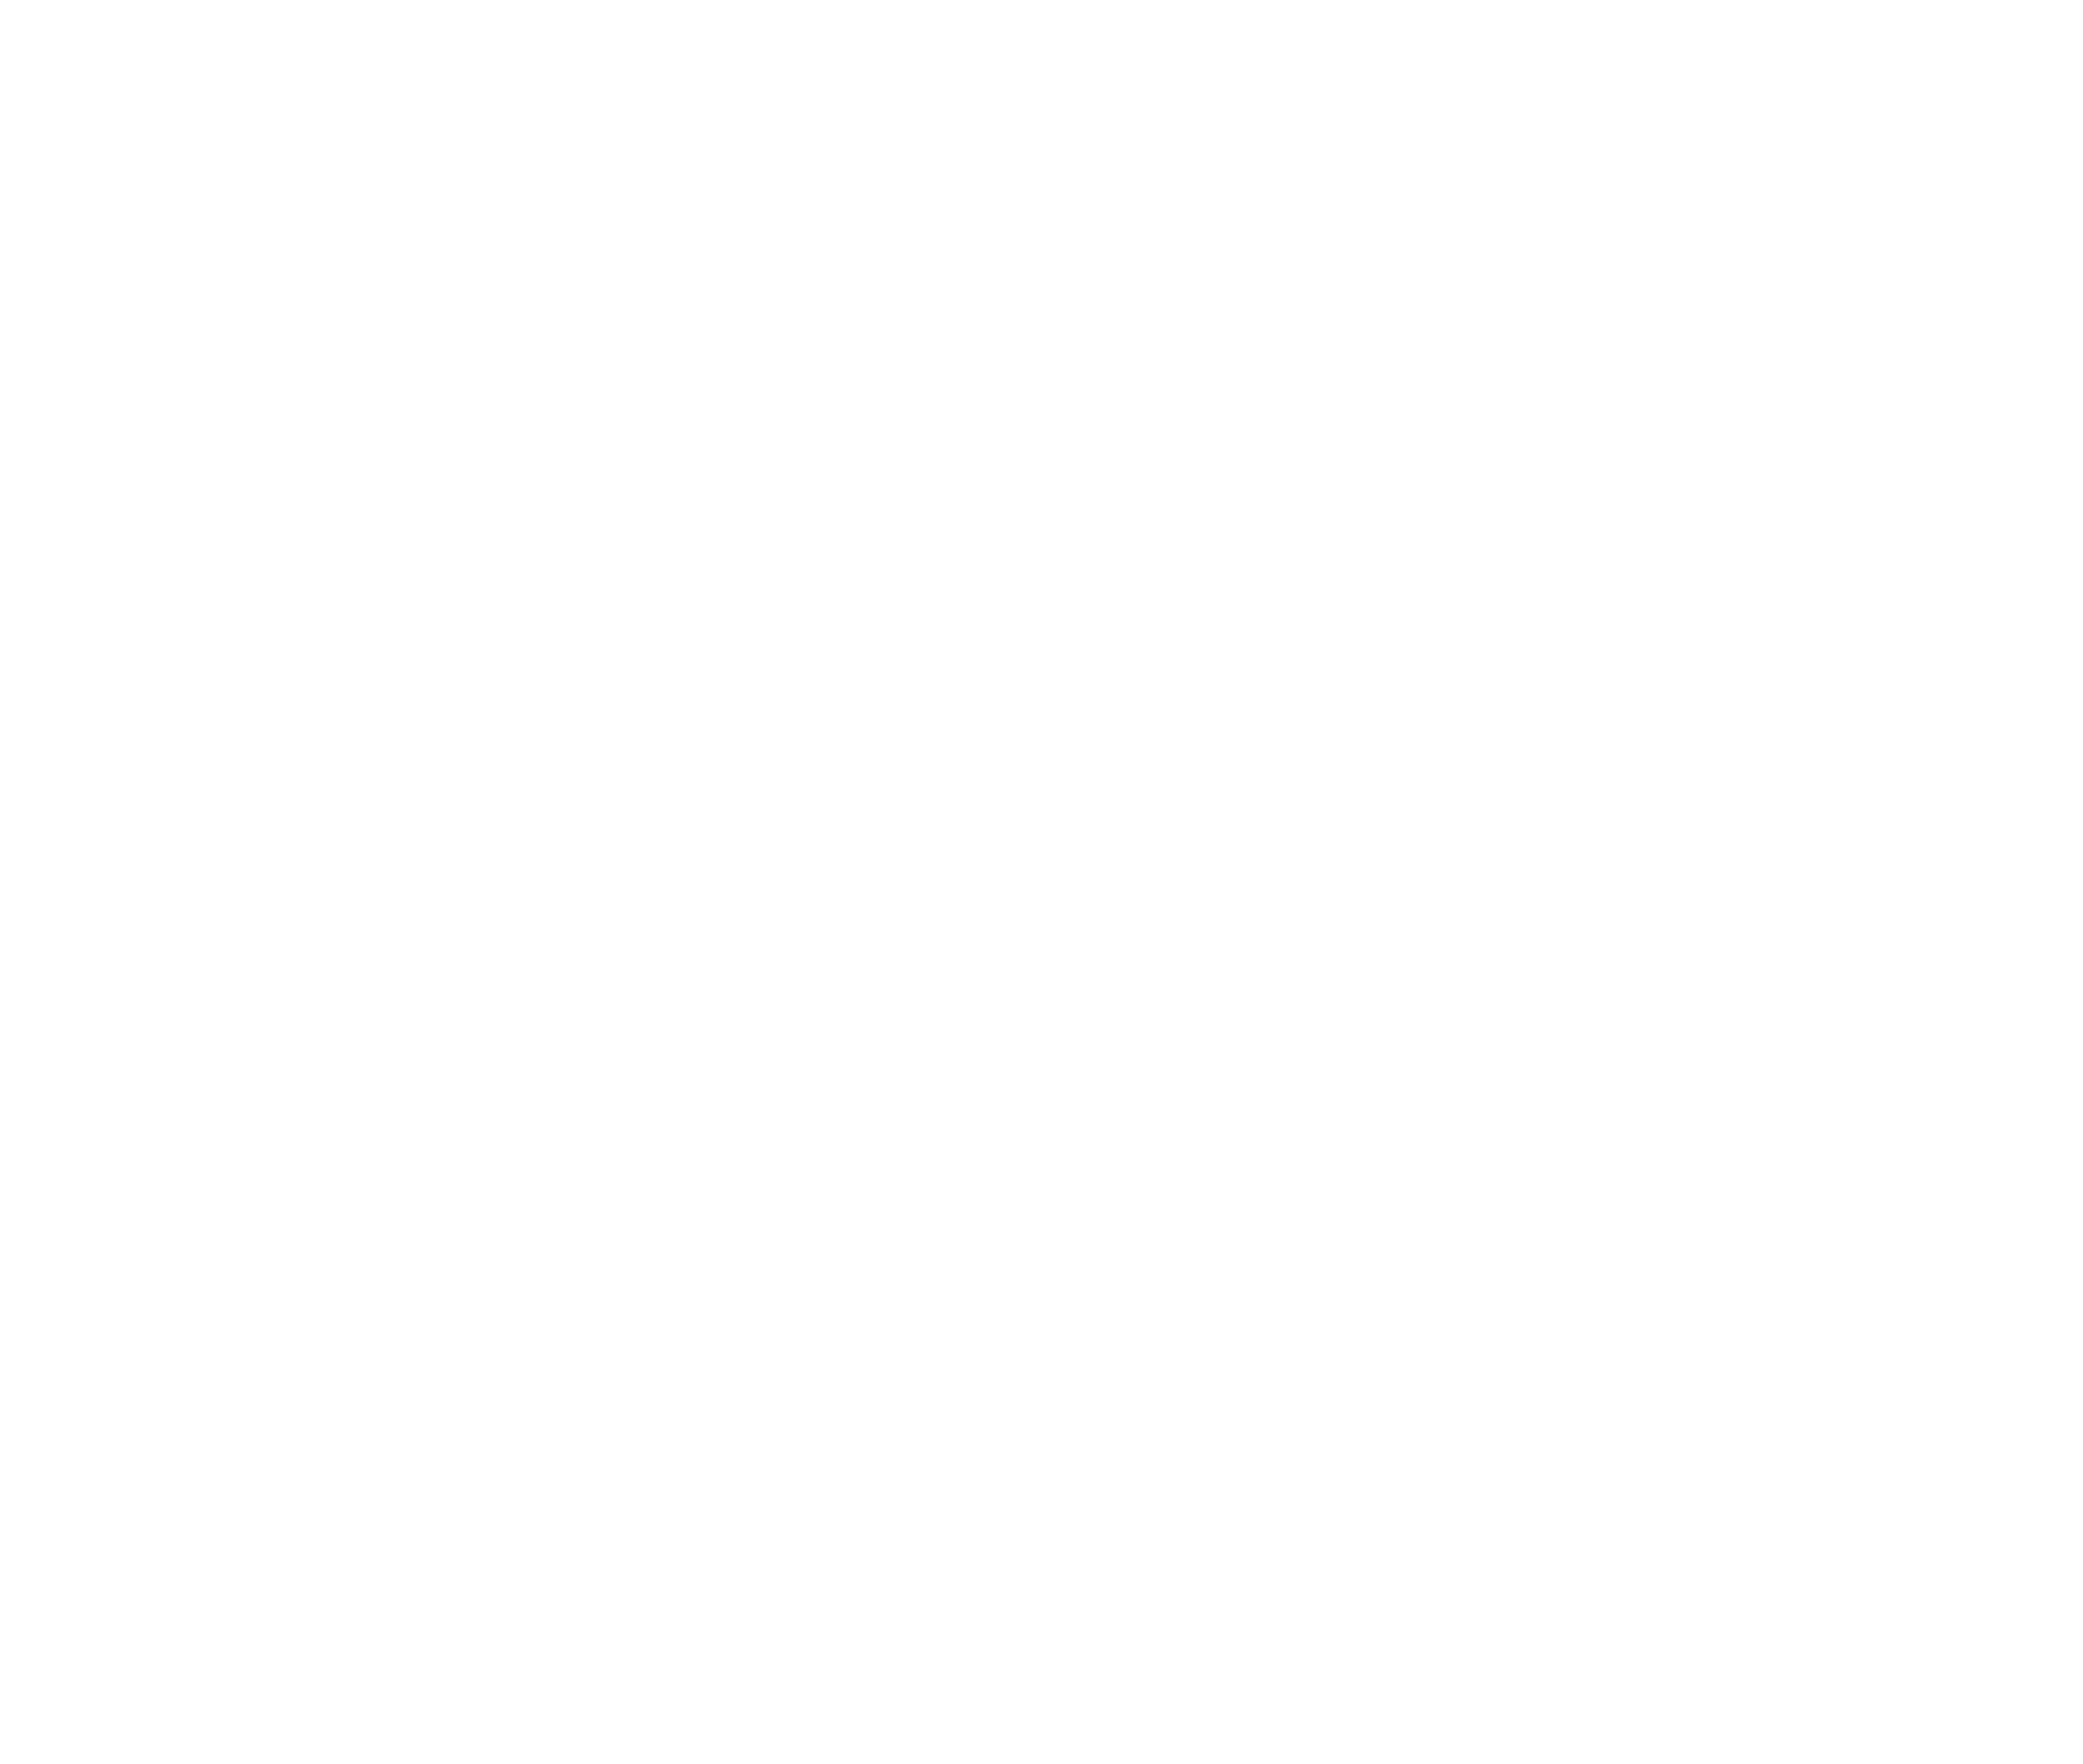 future50 logo